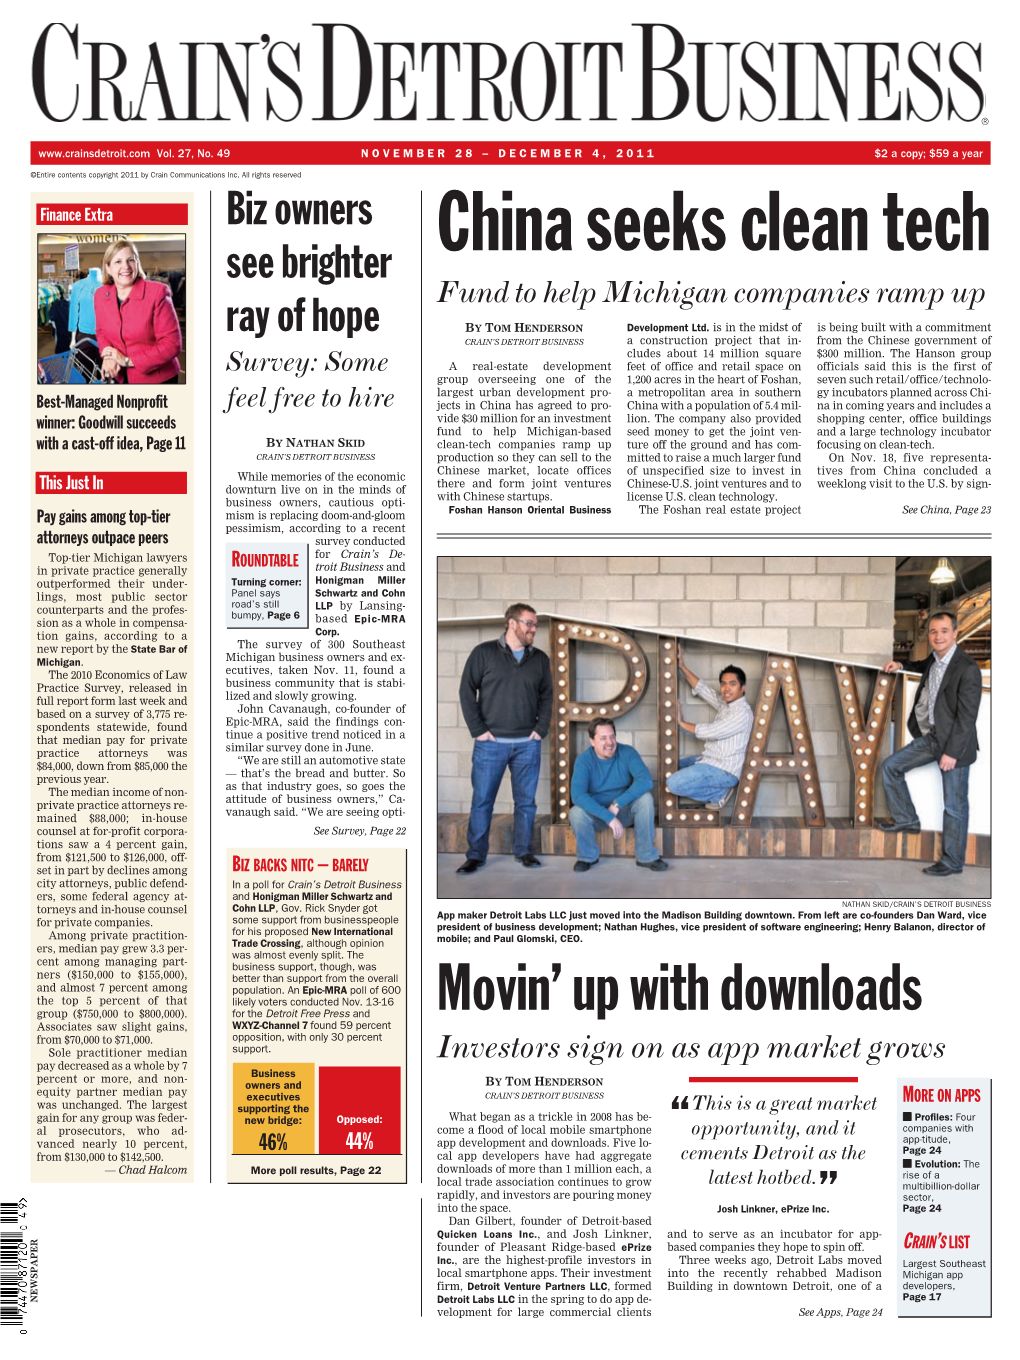 China Seeks Clean Tech Fund to Help Michigan Companies Ramp Up